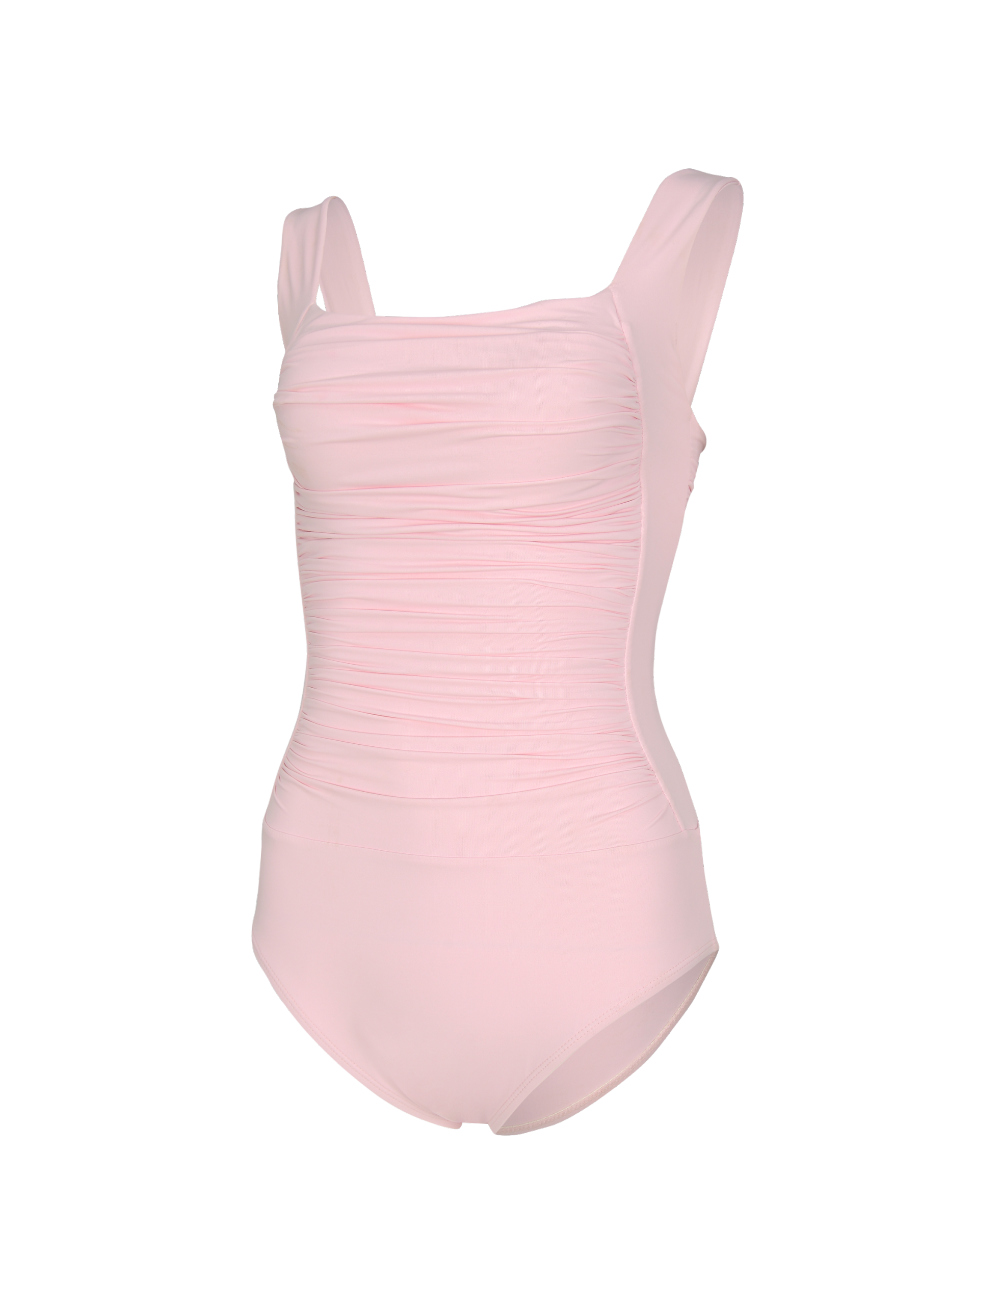 dress baby pink color image-S1L55